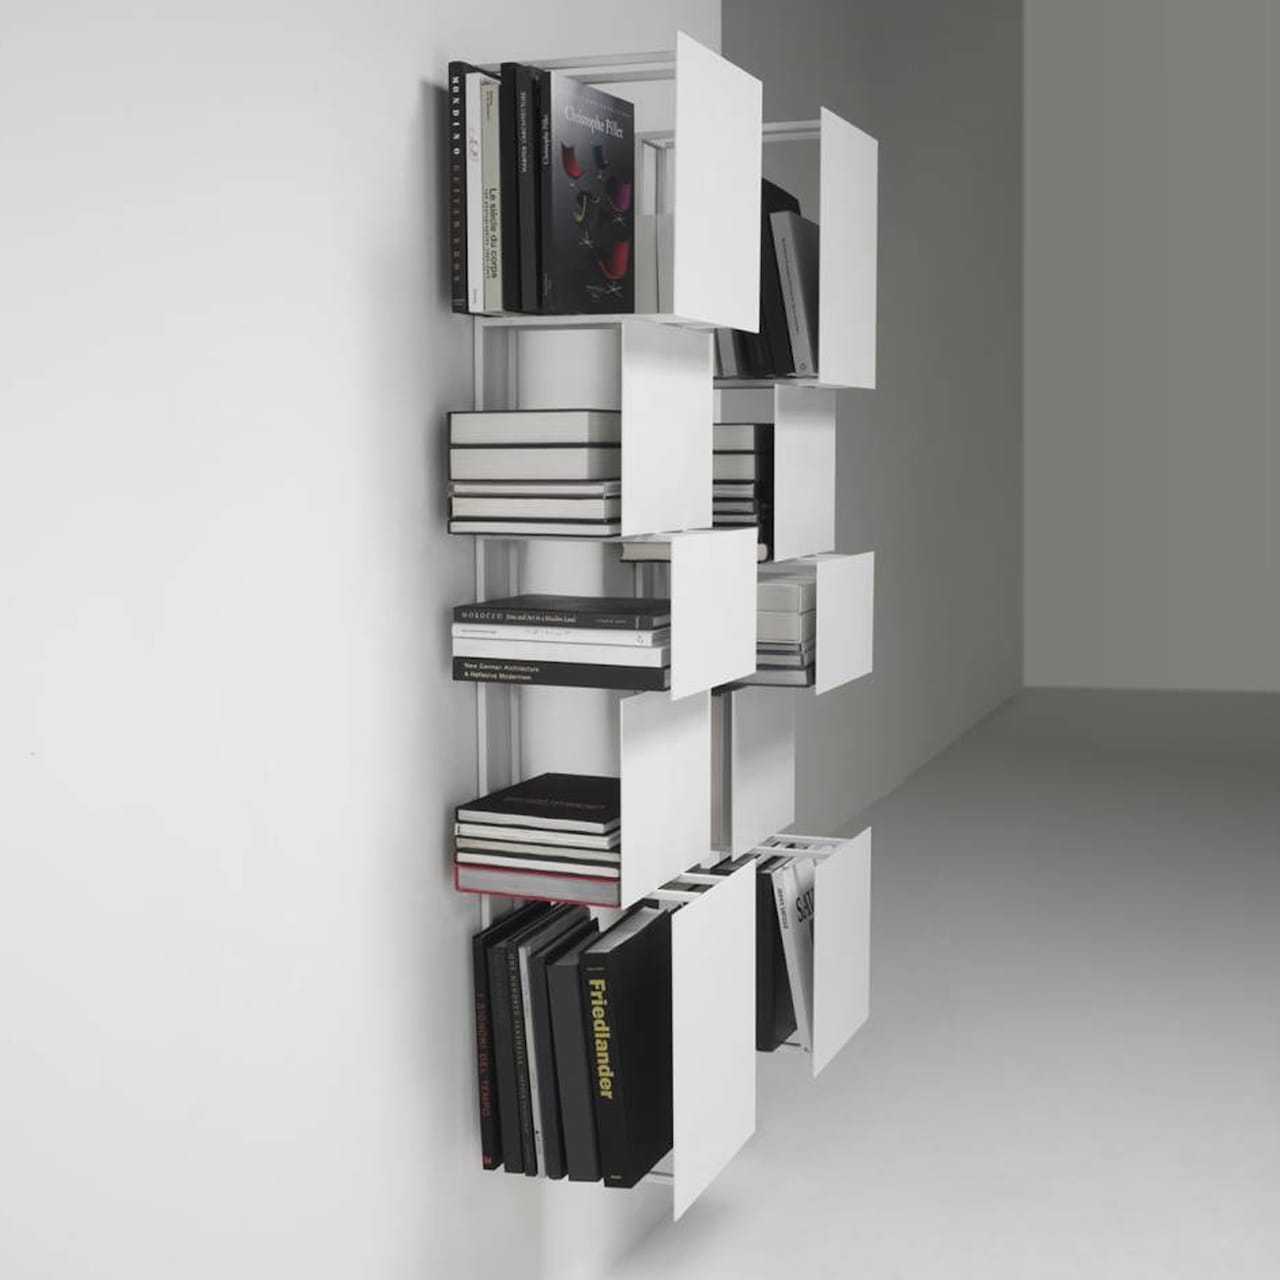 Bukva Bookshelf